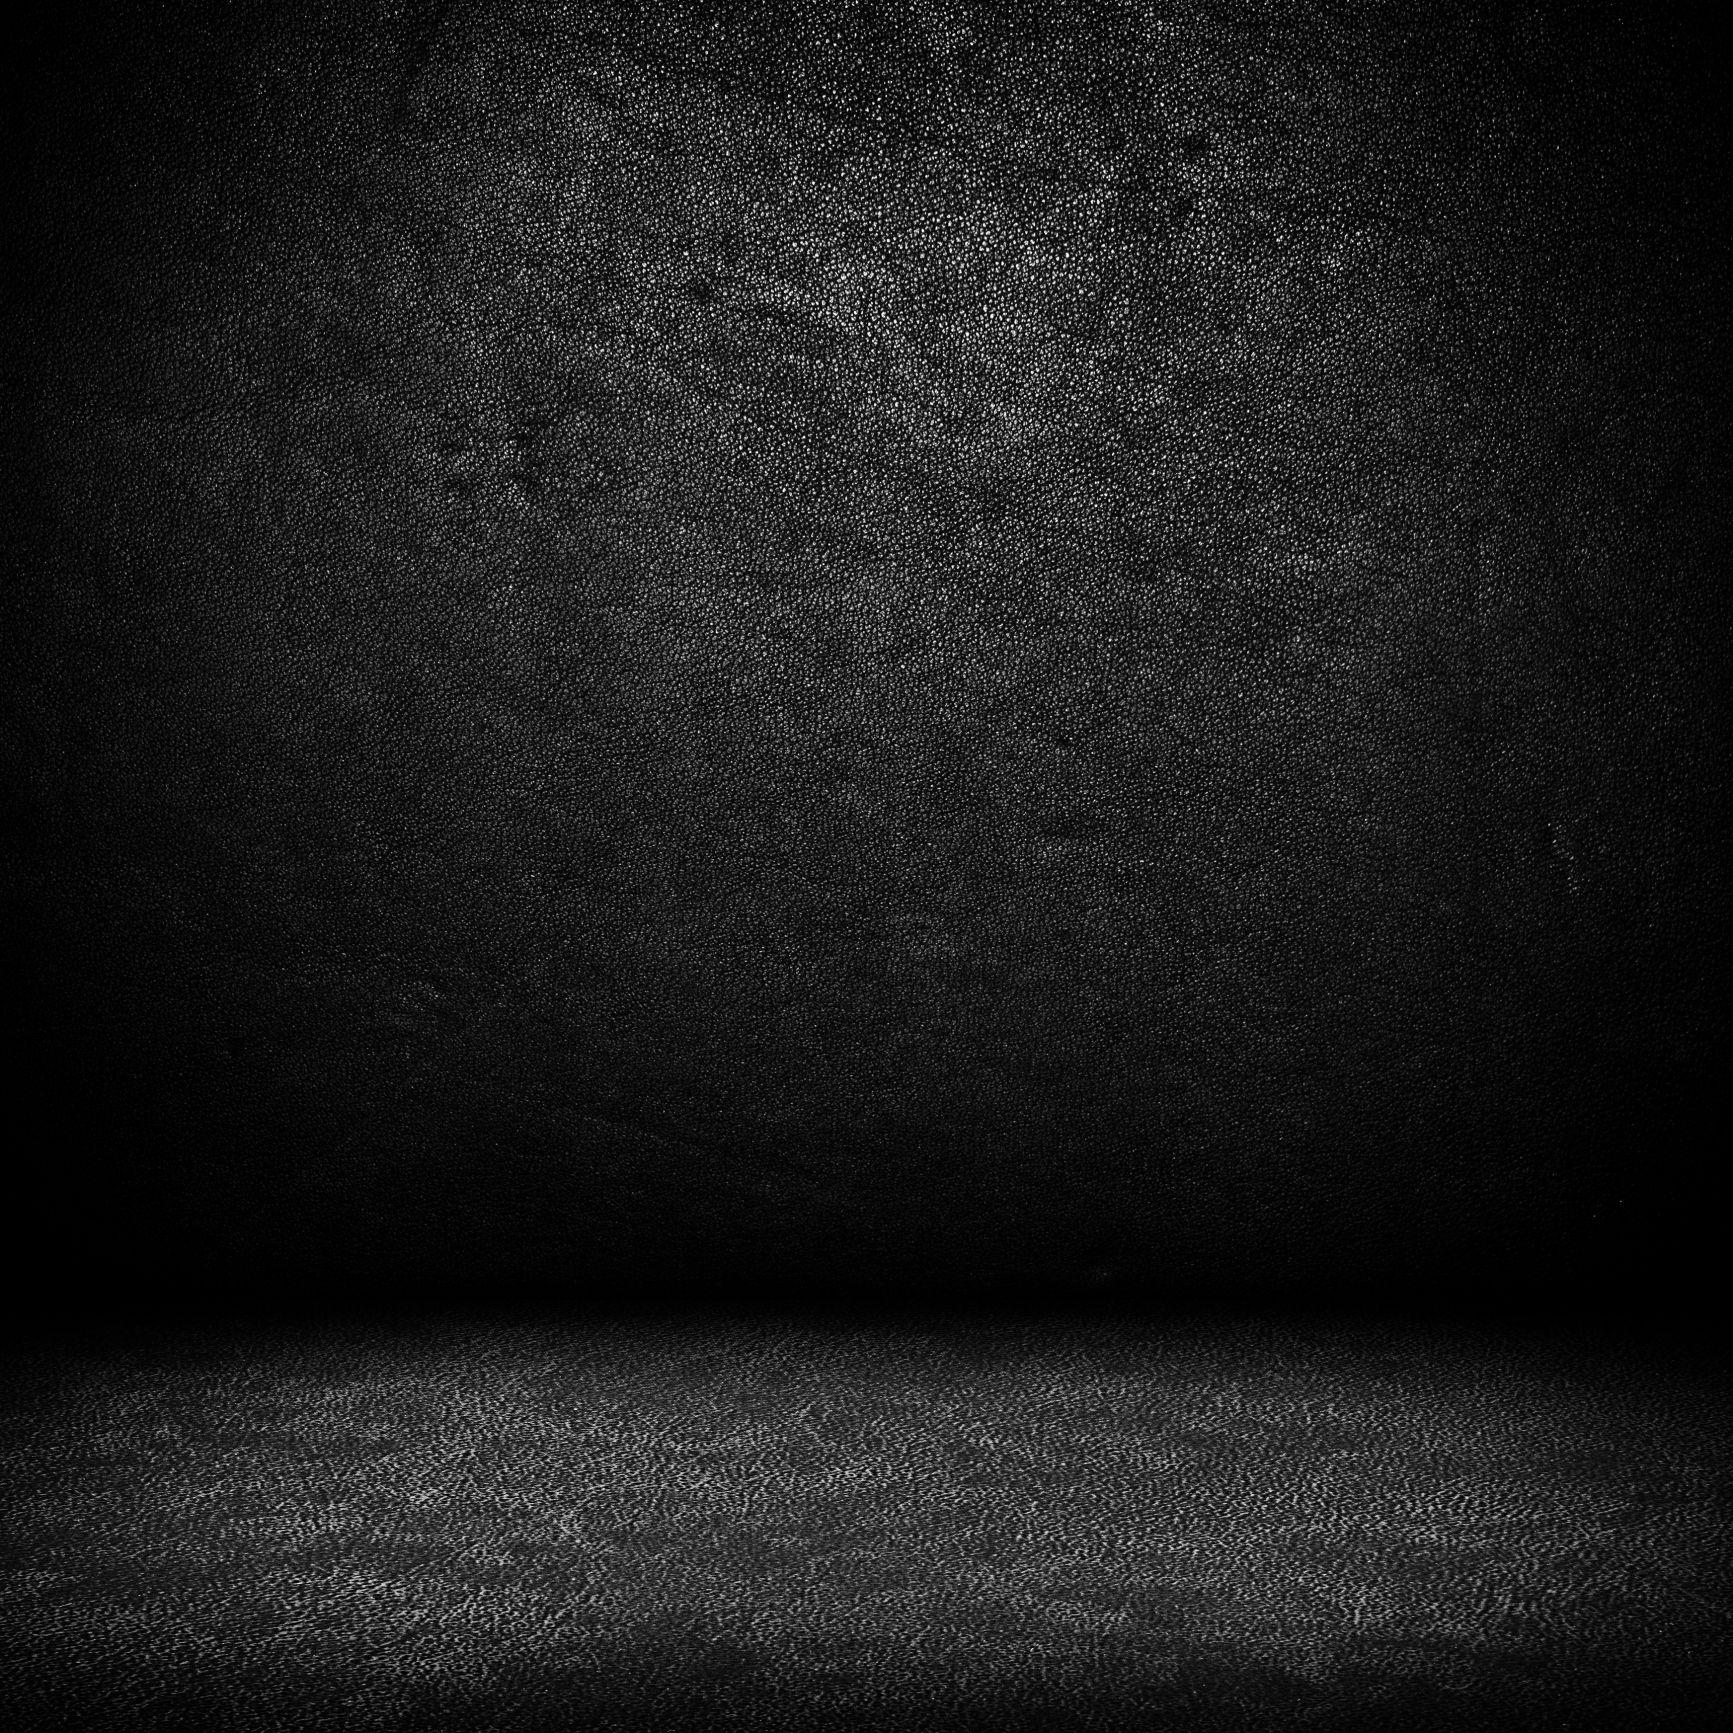 Background Images Black - Wallpaper Cave